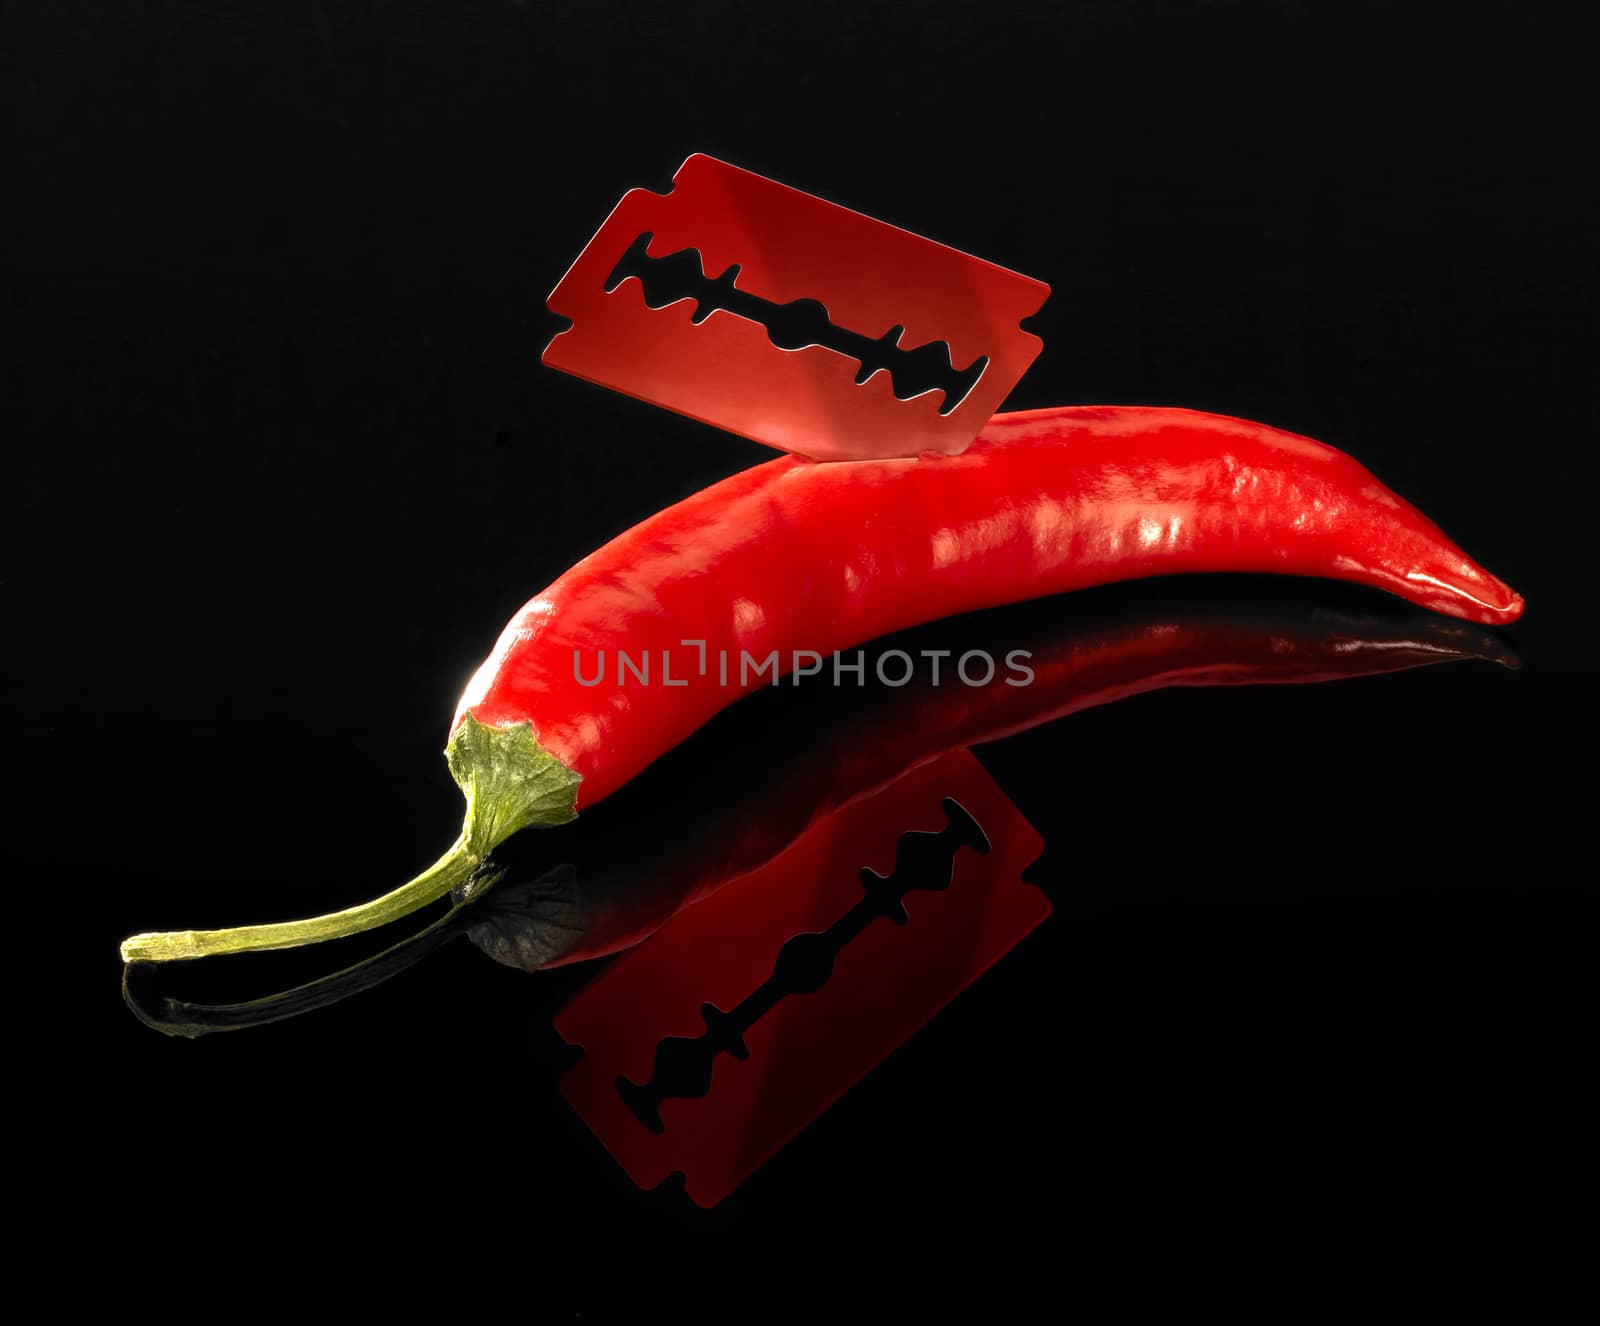 chili and razor blade by gewoldi